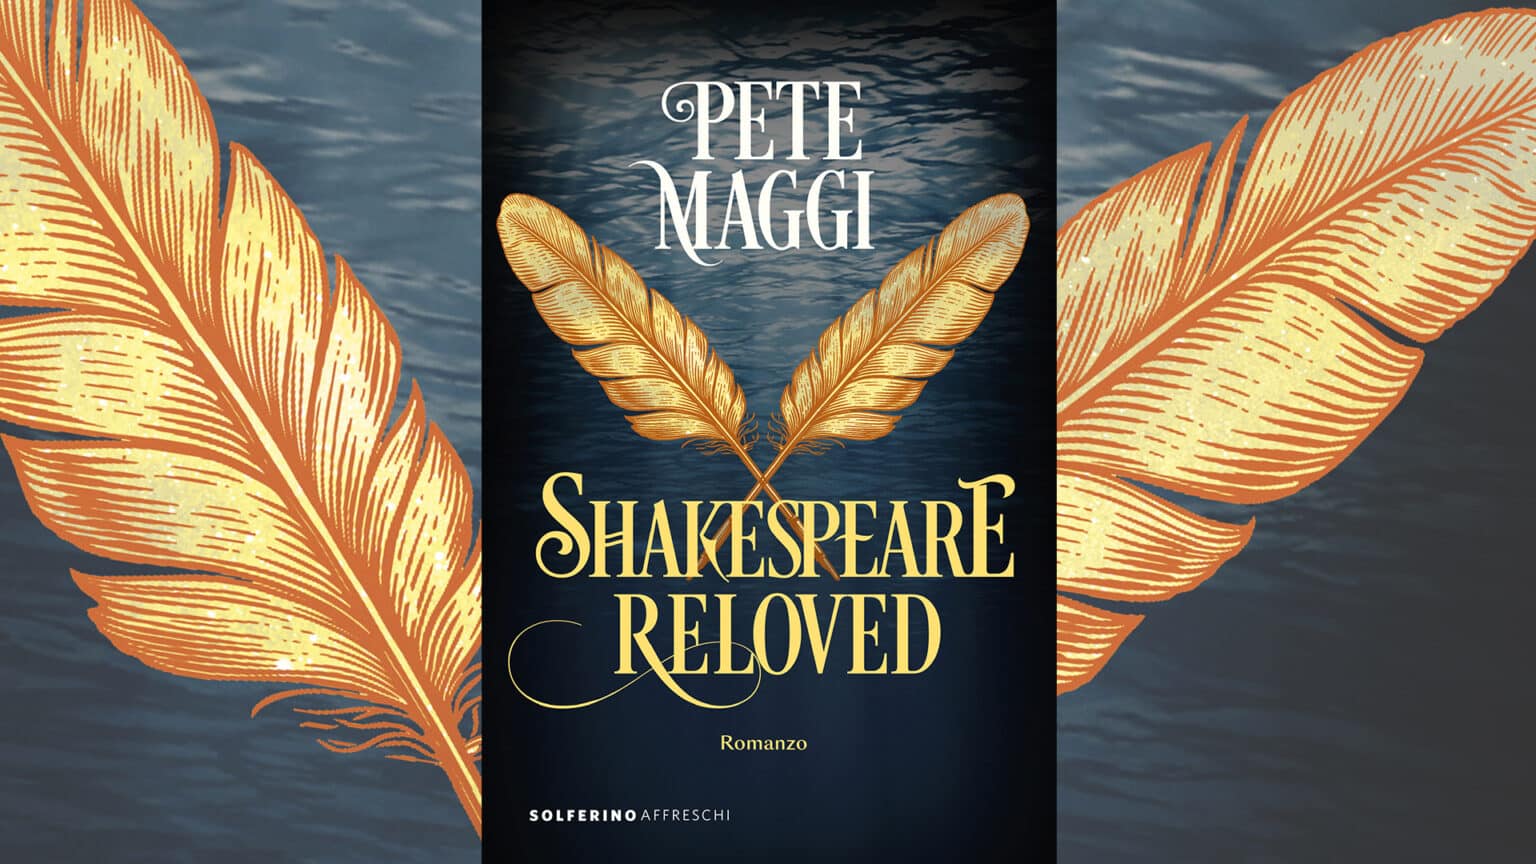 Pete Maggi – Shakespeare reloved